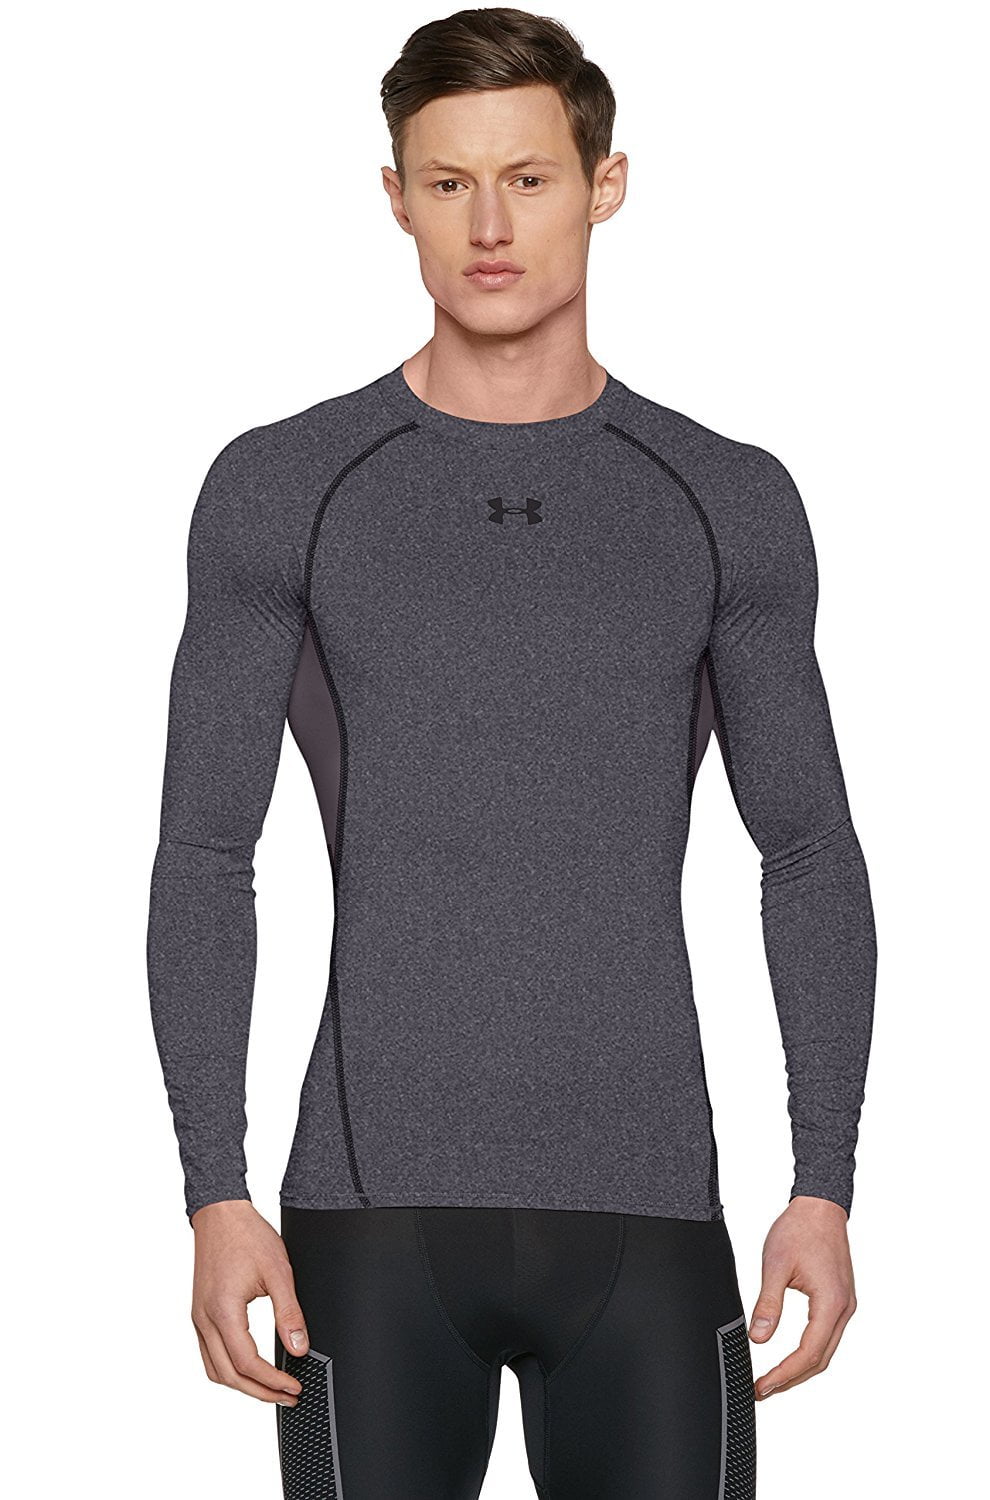 2020 Under Armour Mens Long Sleeve Compression Top Baselayer Shirt UA HeatGear 